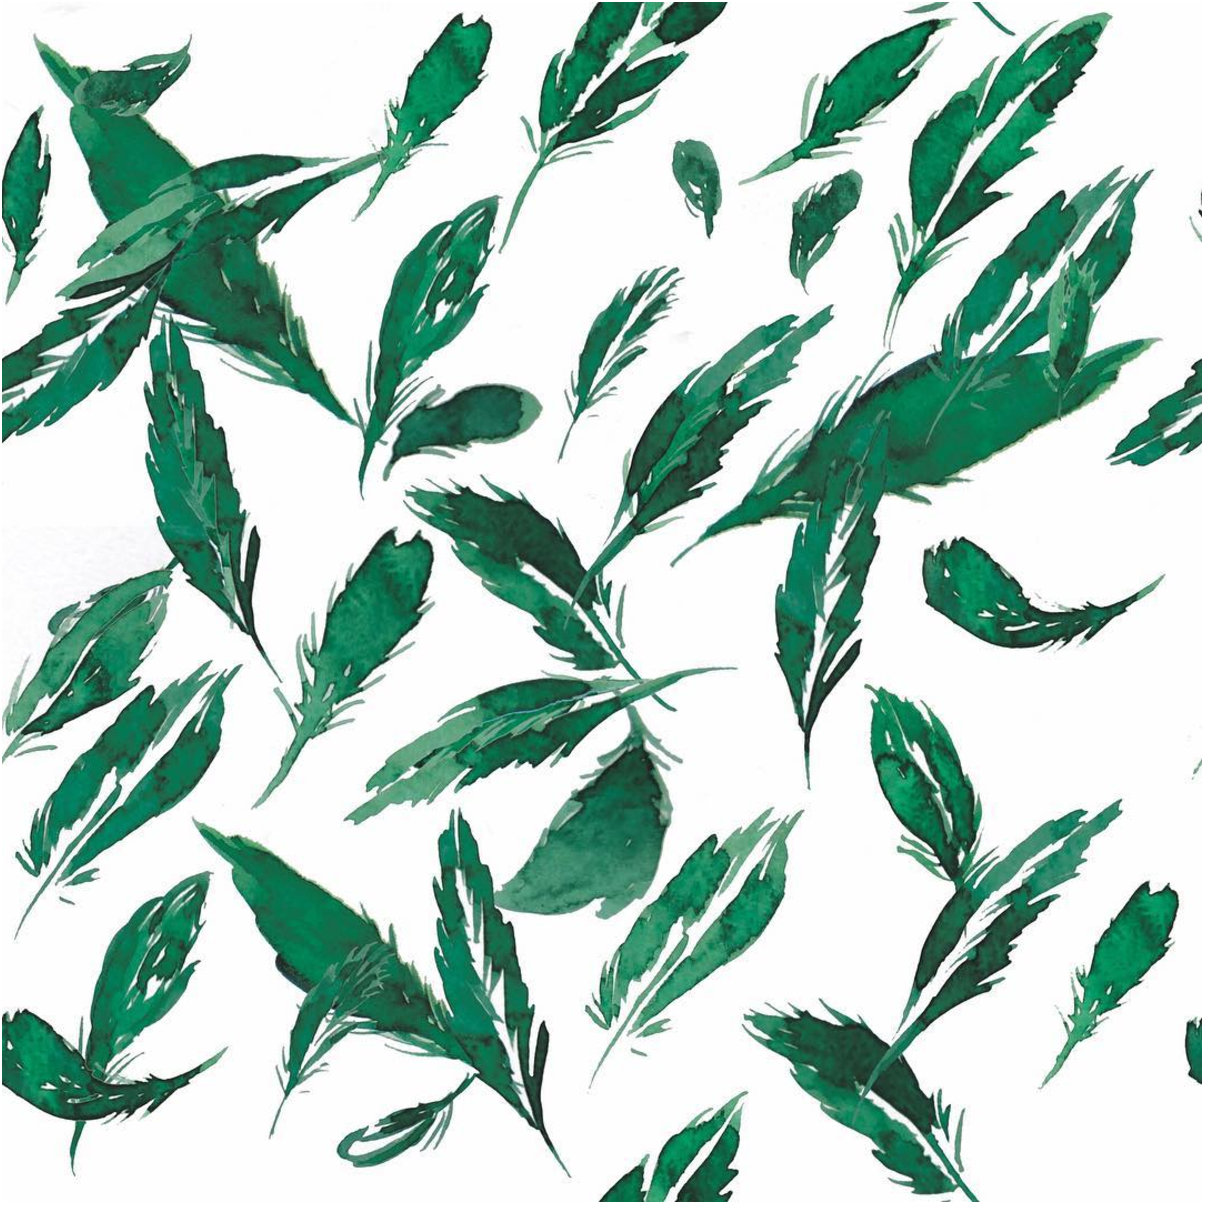 Green Feather Envelope Liner Pattern by RSVP Paper Co via Instagram